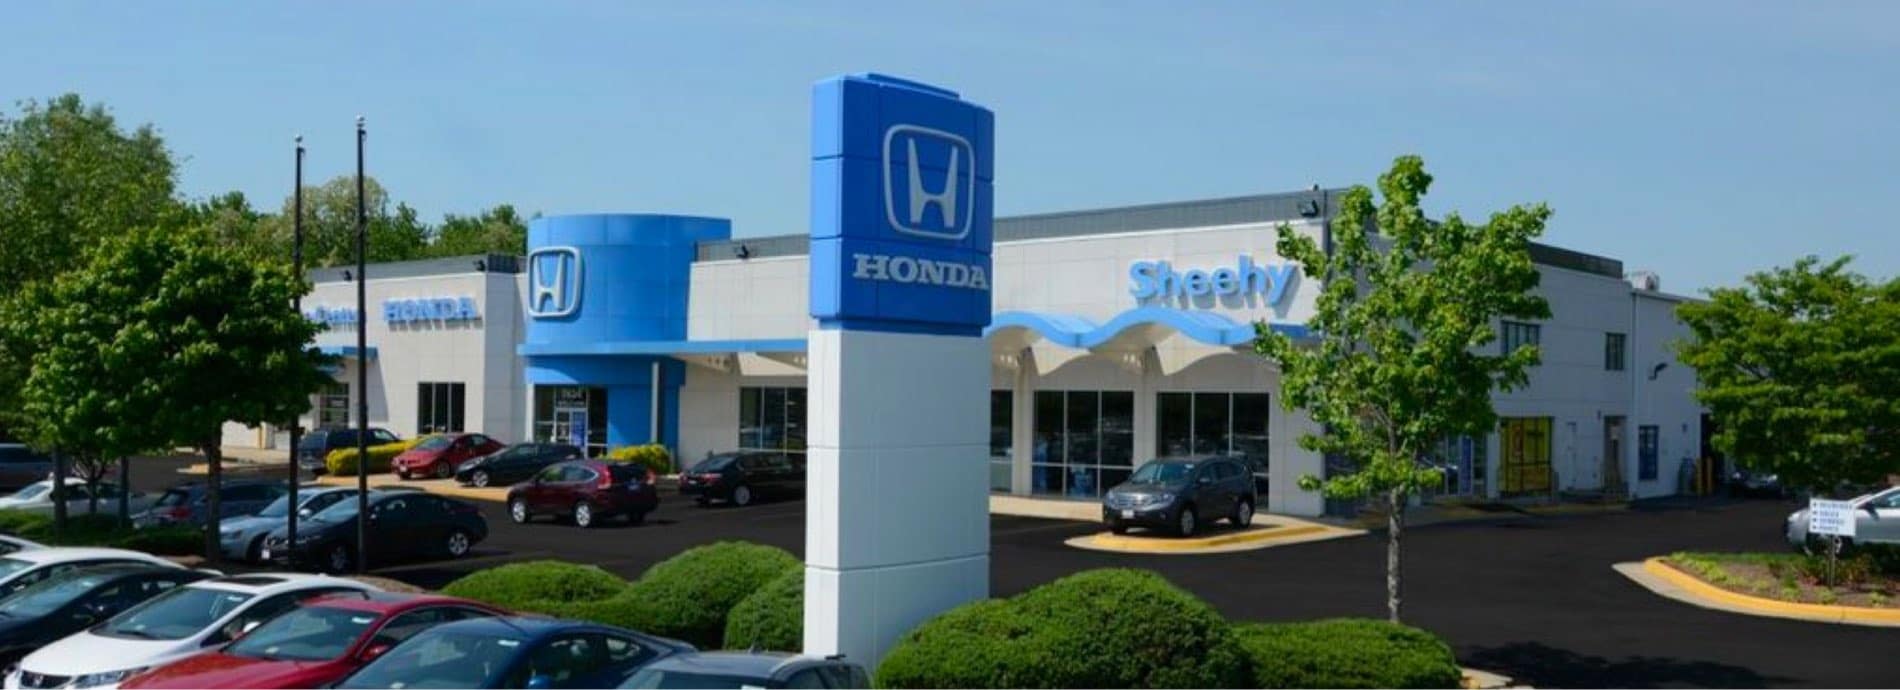 An exterior shot of a Honda dealership